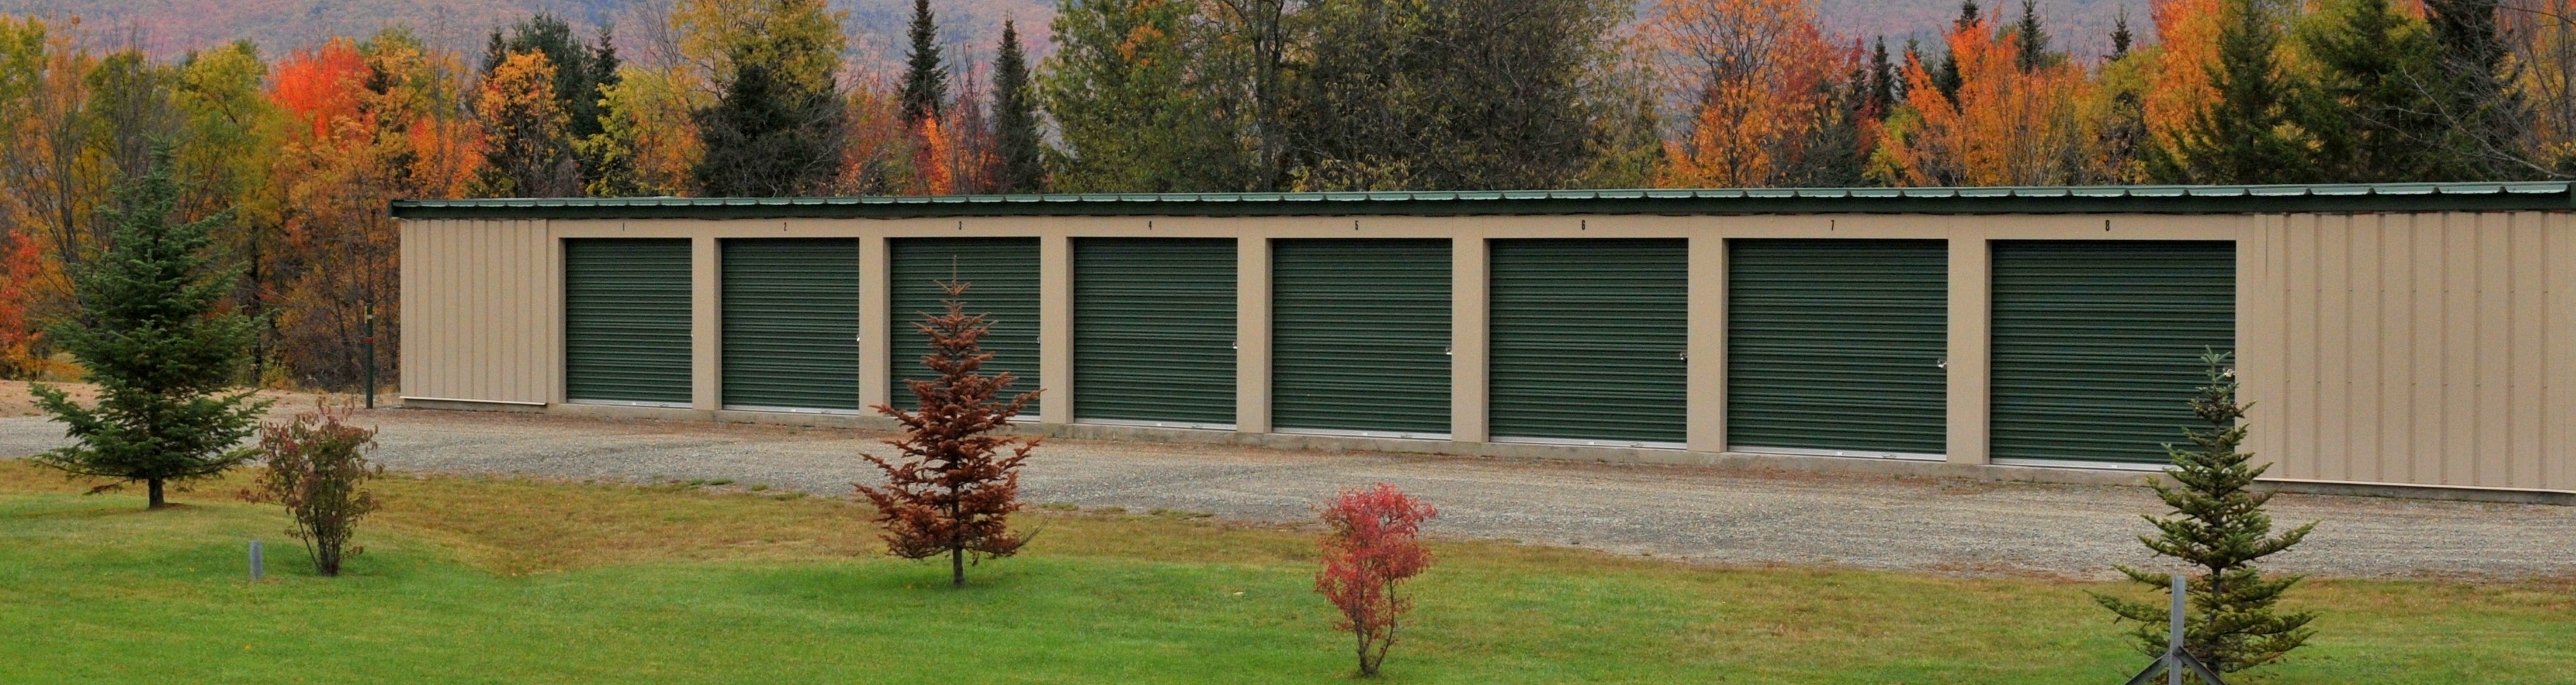 Area Storage of McGregor - North - Affordable Storage Units in McGregor, MN